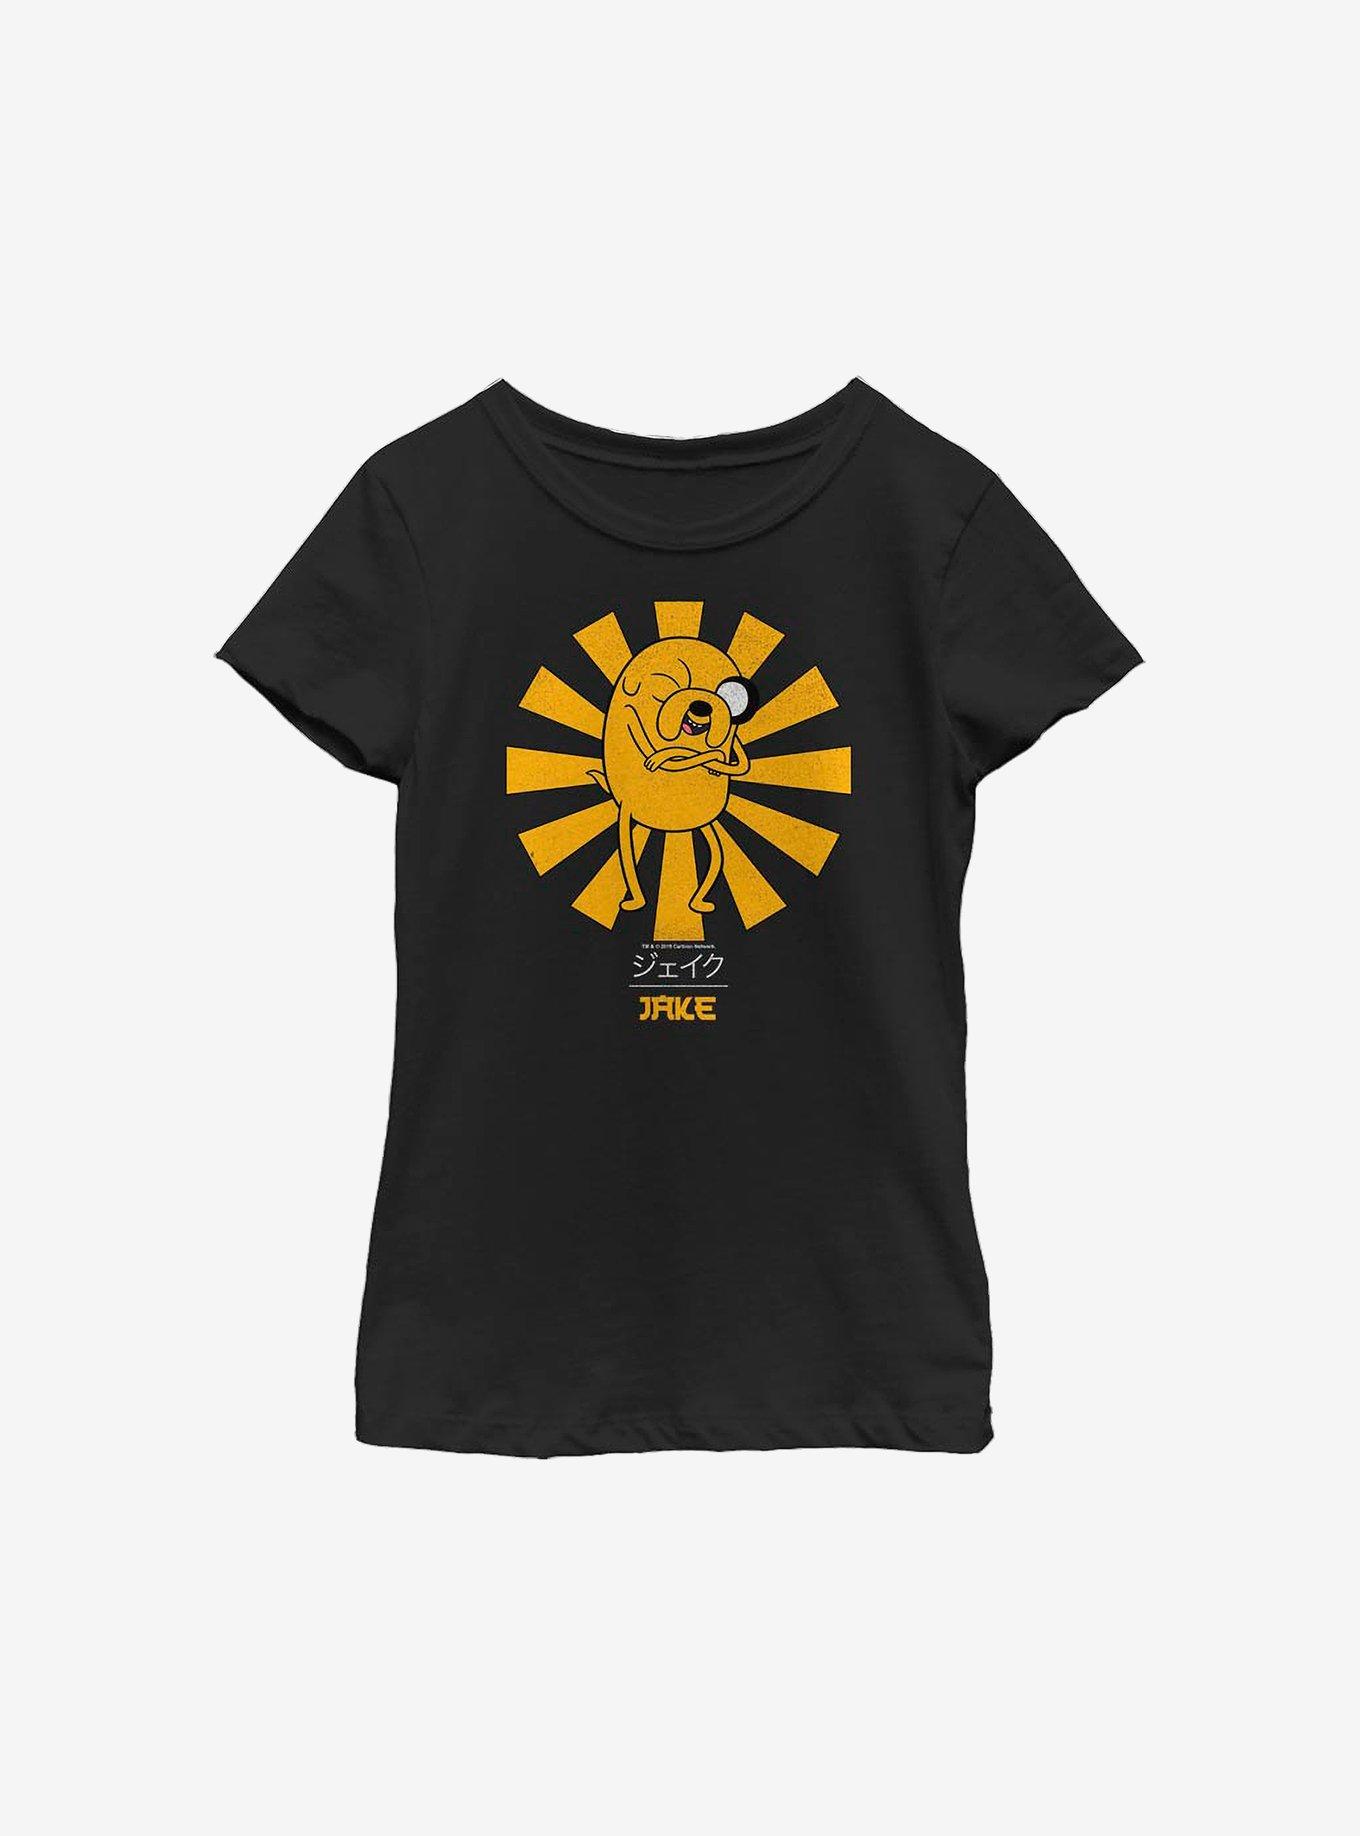 Adventure Time Jake Youth Girls T-Shirt, BLACK, hi-res